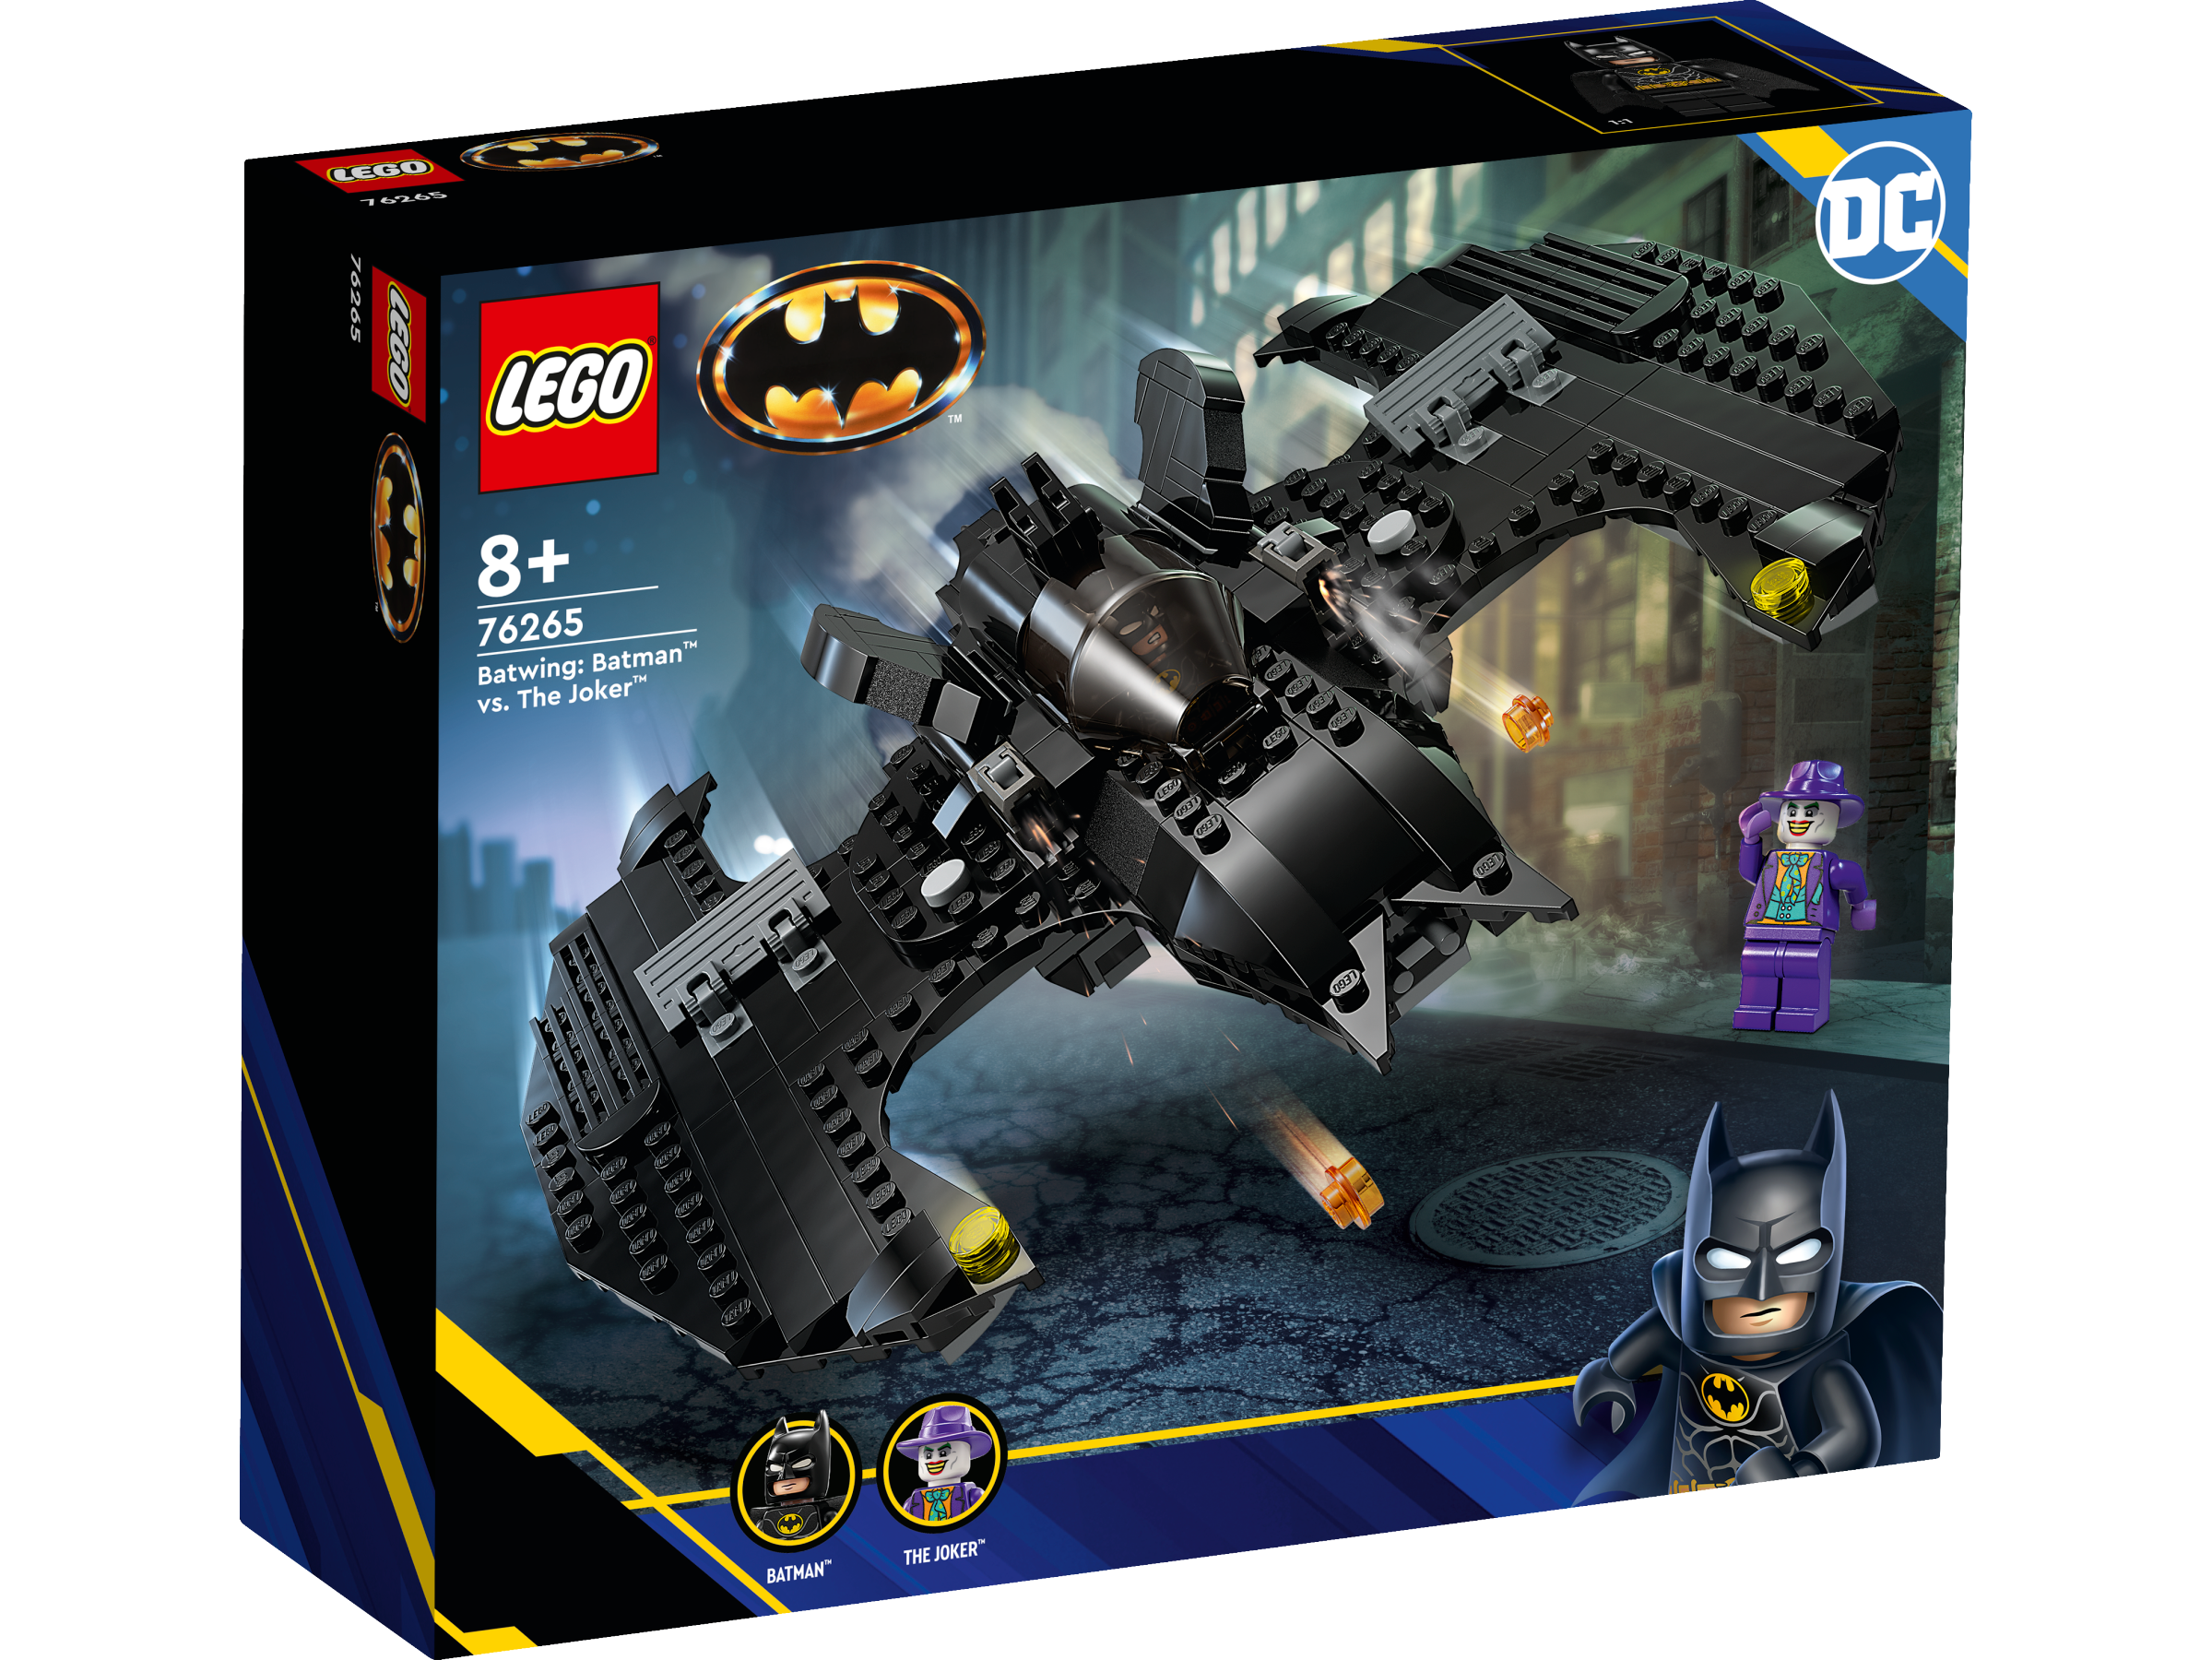 Lego 76265 Batwing Batman vs. The Joker Set